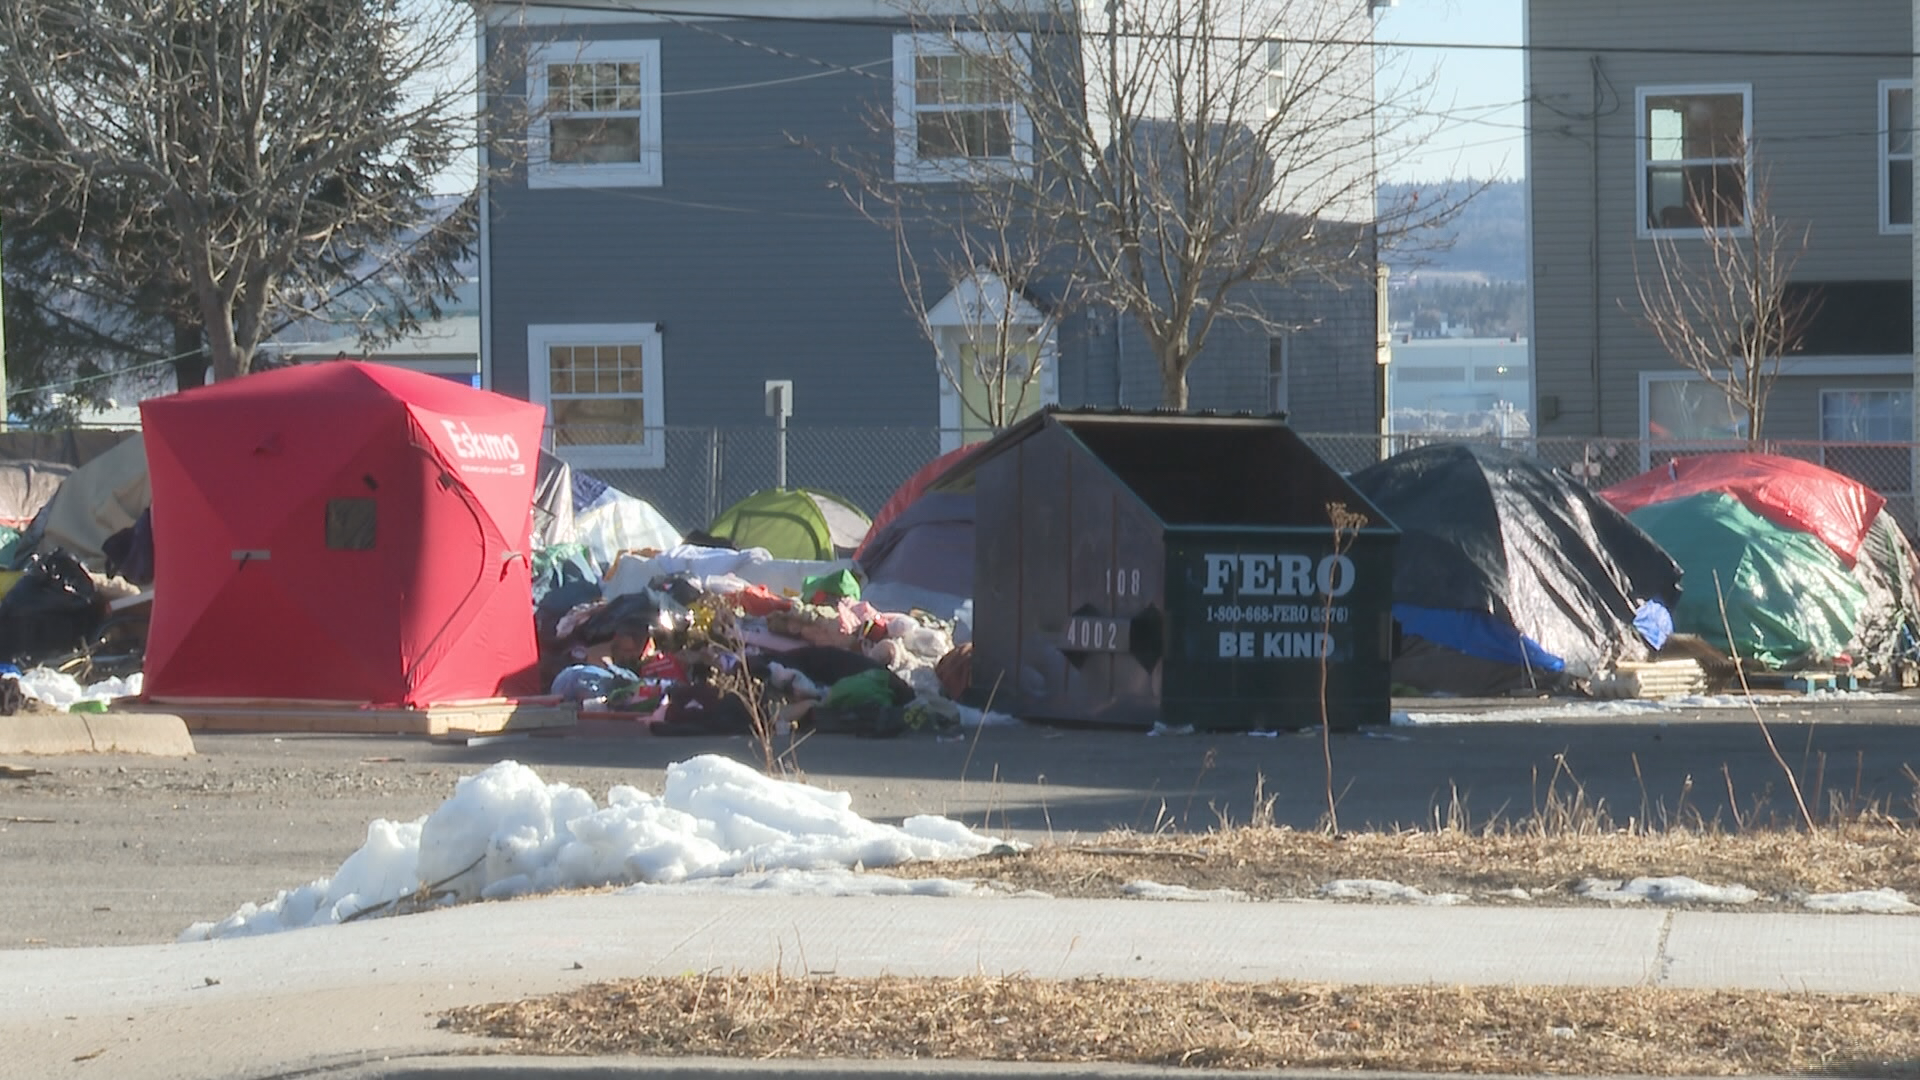 Saint John considering building ‘managed encampment site’ to combat homelessness